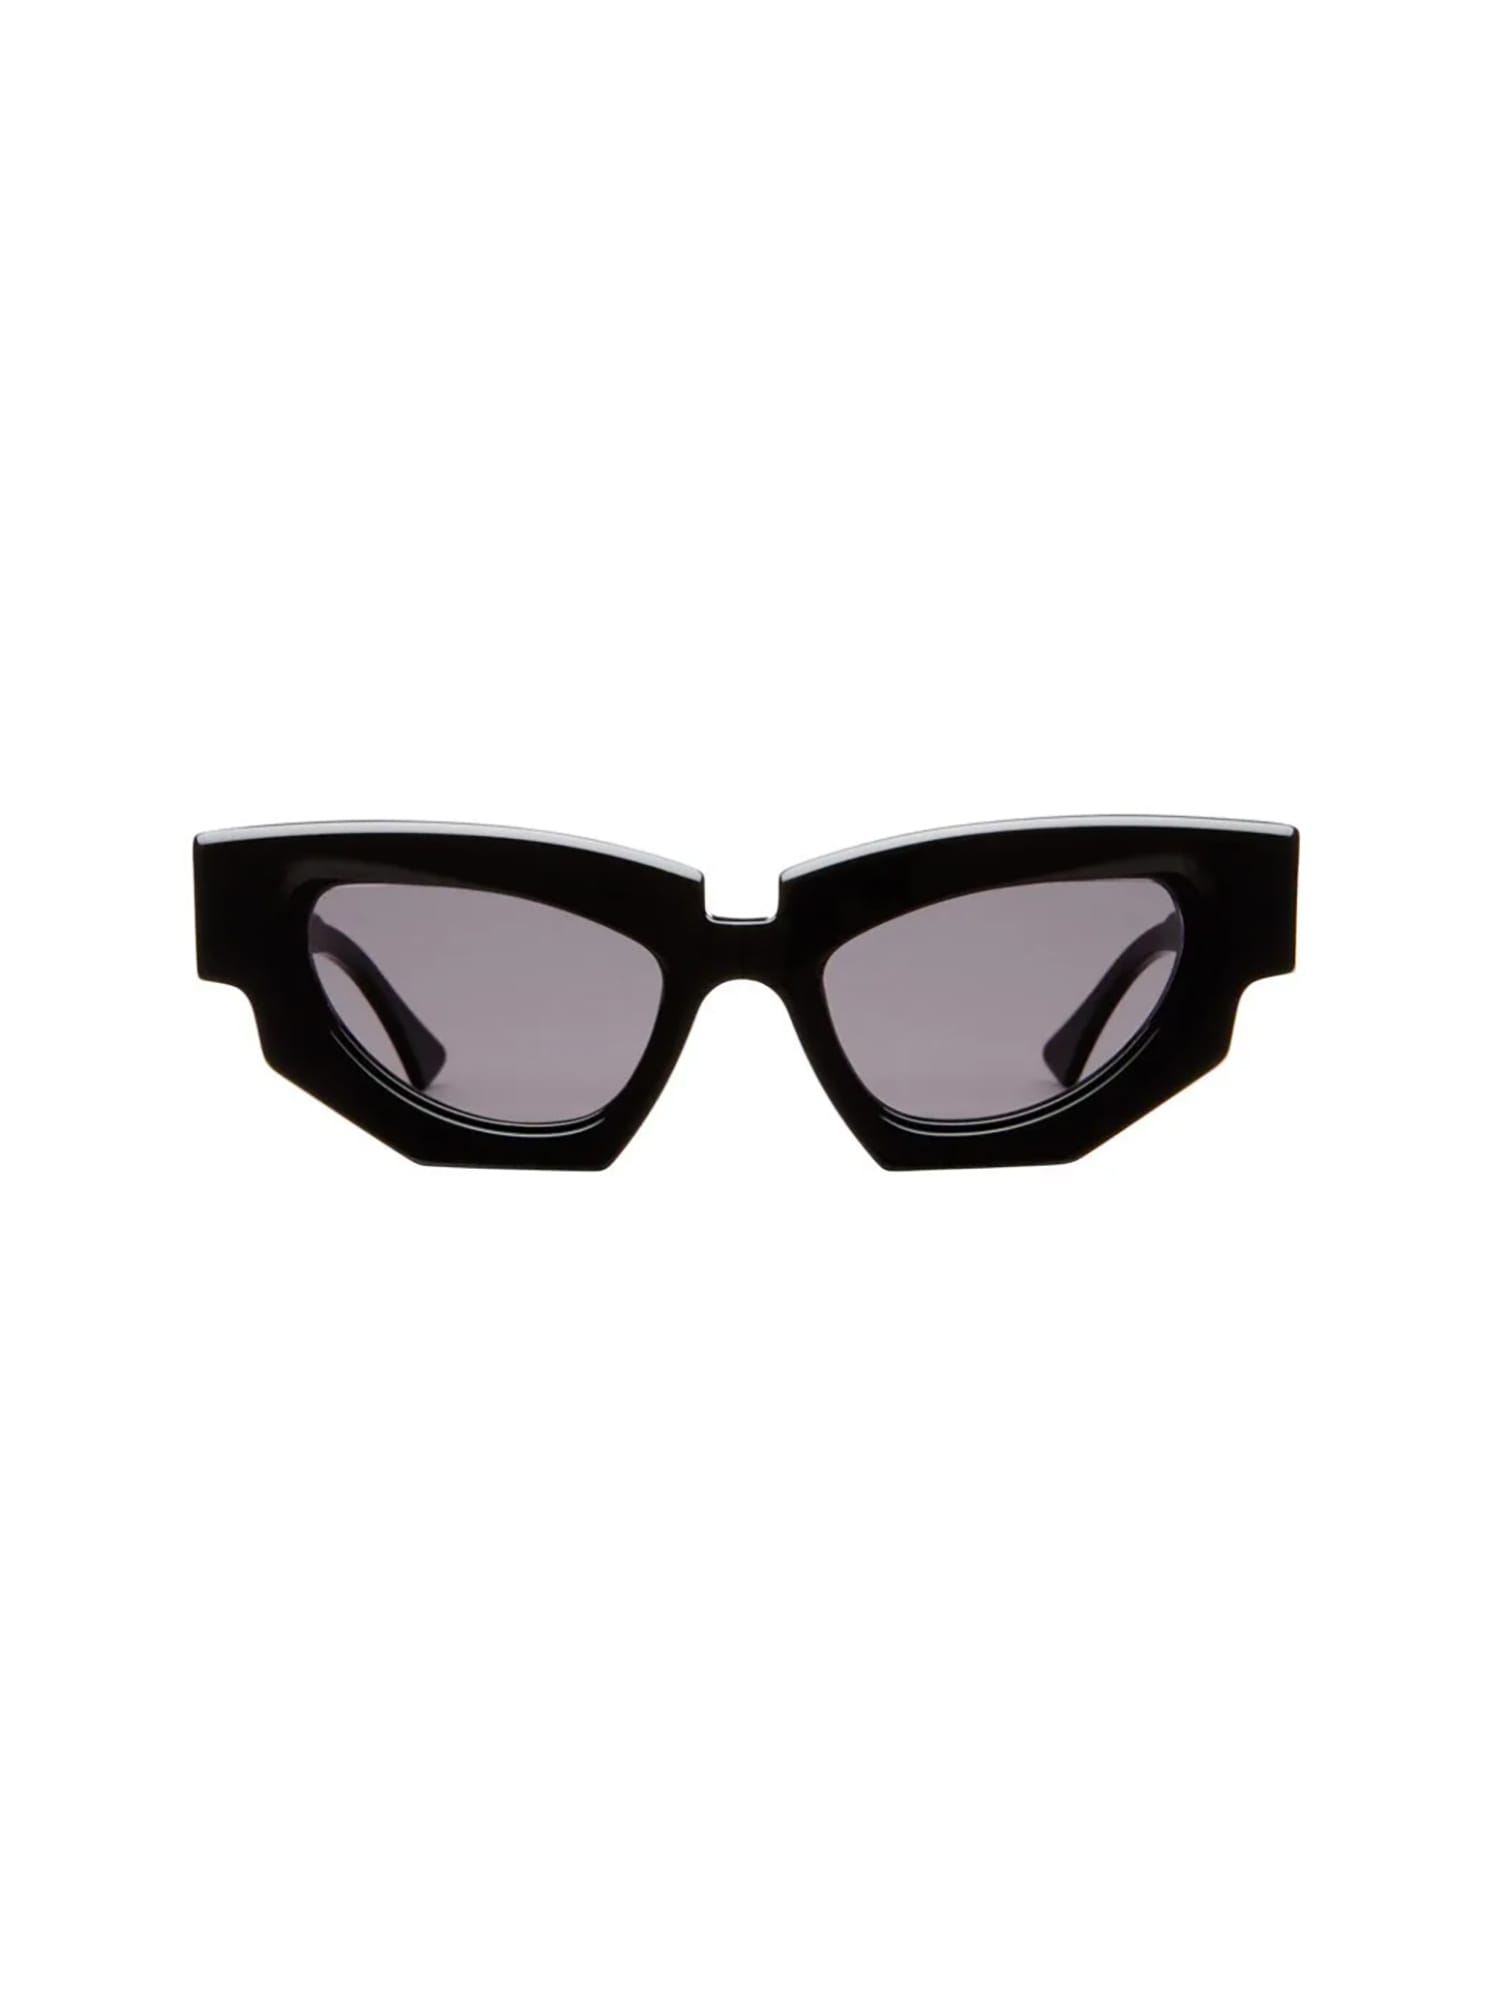 F5 Sunglasses